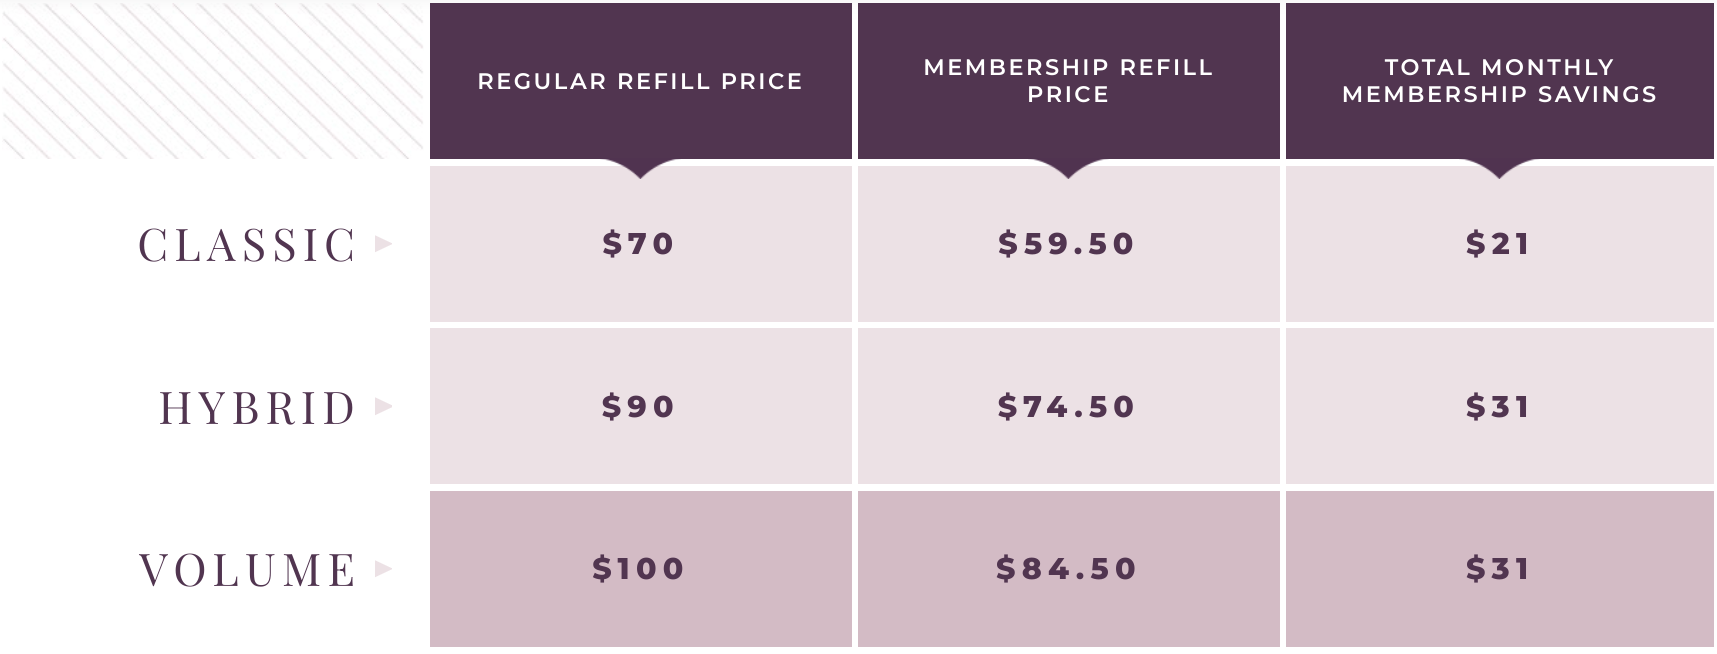 Membership Refill Pricing